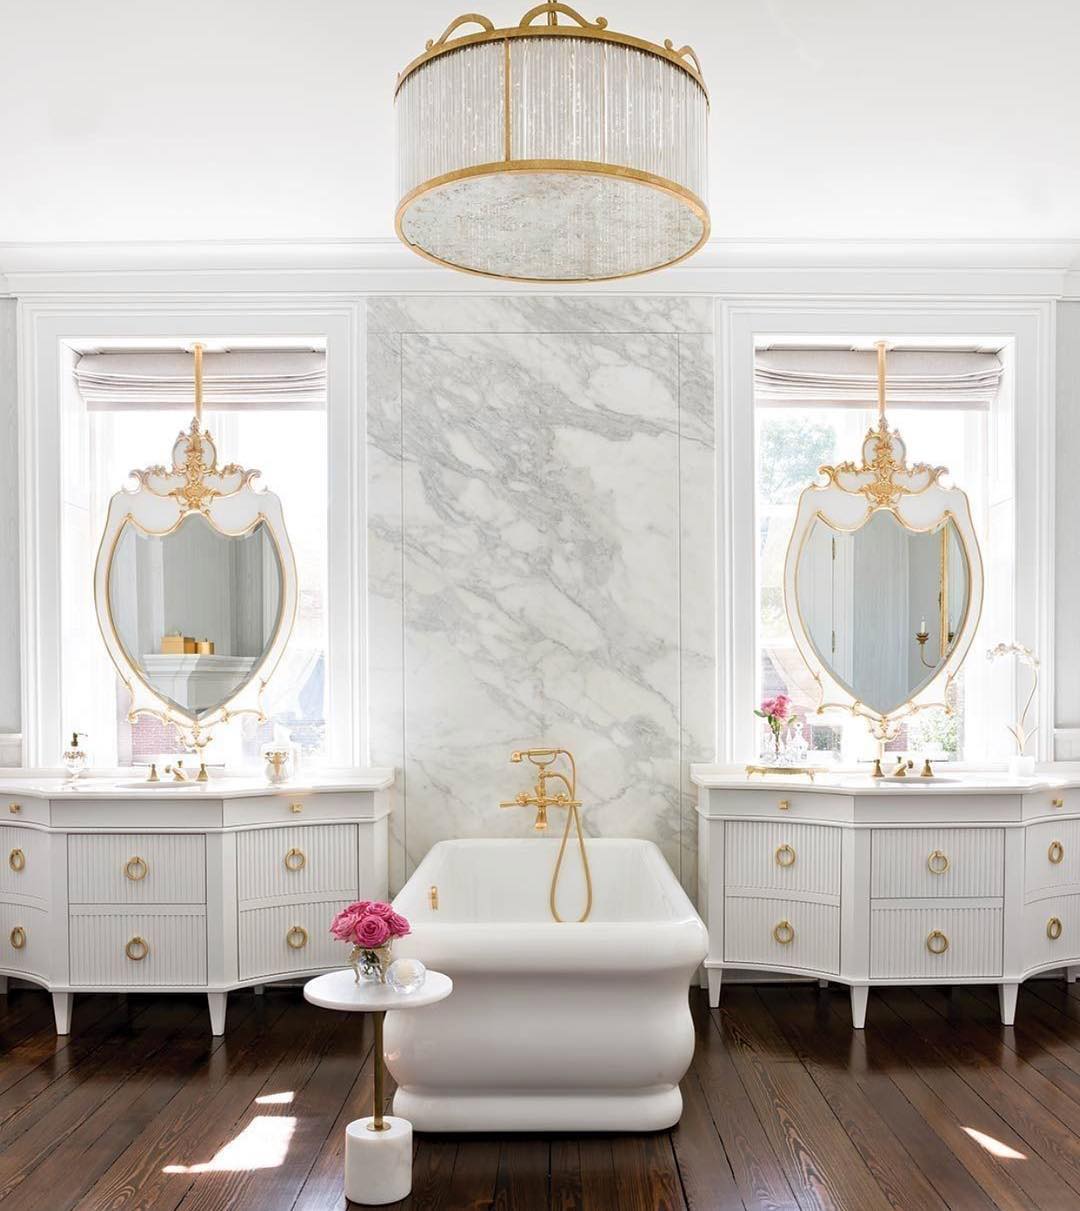 Glam Bathroom with Bathtub for Soaking via Maria Galiani via @southernhomemag